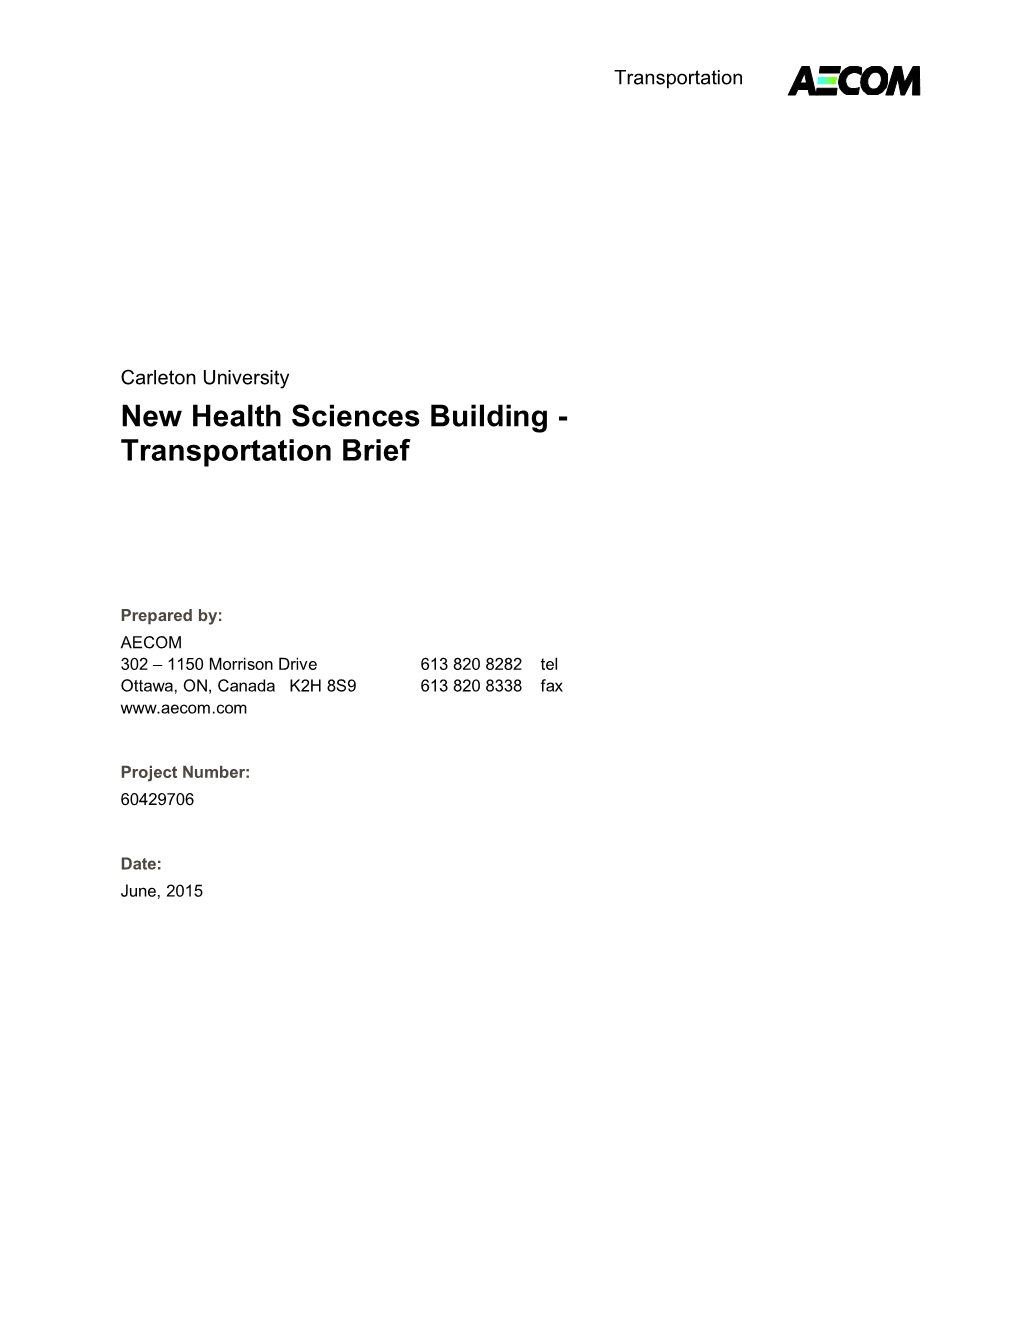 New Health Sciences Building - Transportation Brief